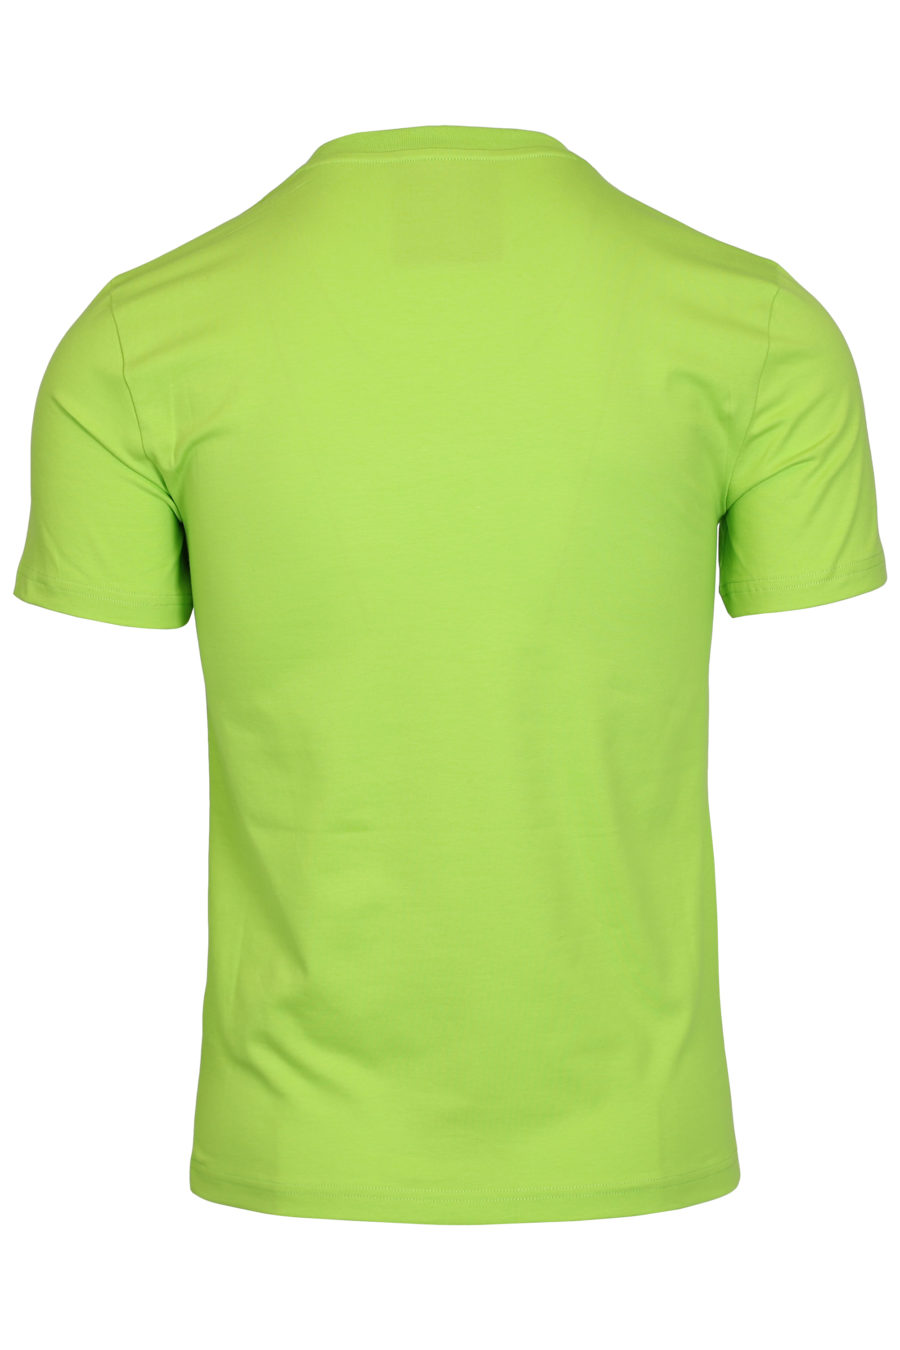 Camiseta verde logo grande parte delantera - IMG 1023 1